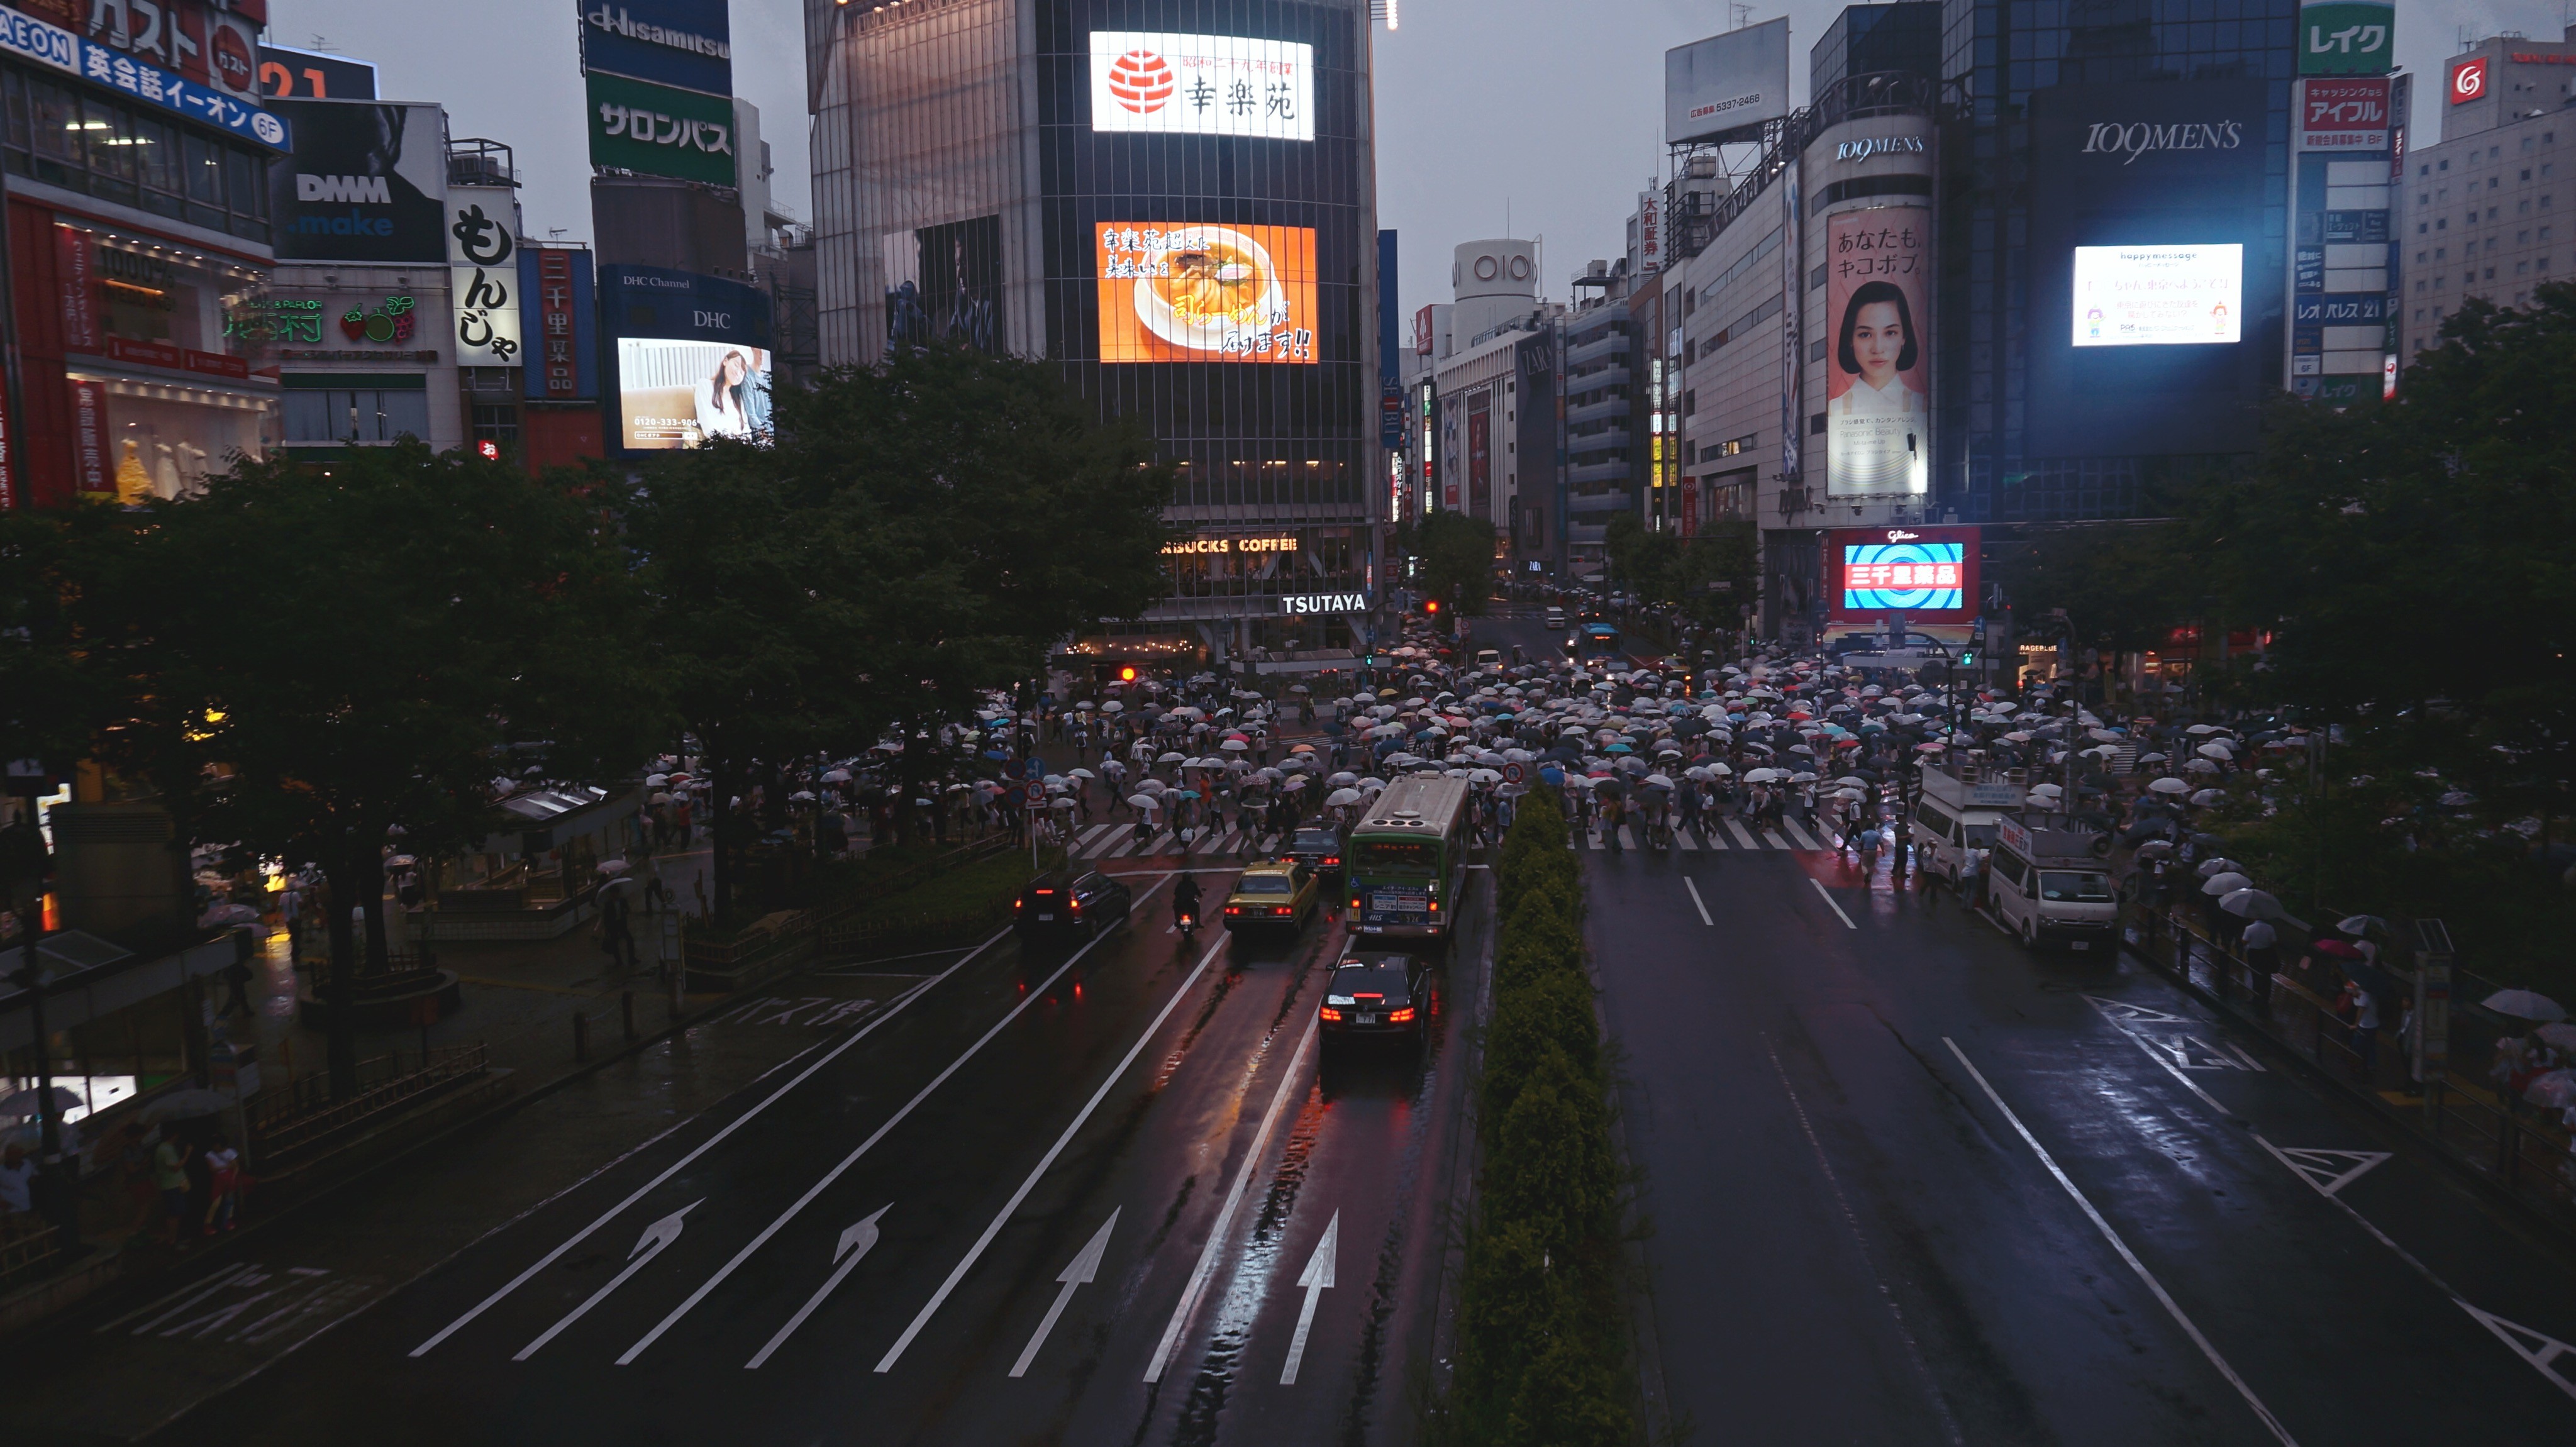 General 4096x2301 city car Japan Tokyo Shibuya Asia people traffic street traffic crossing